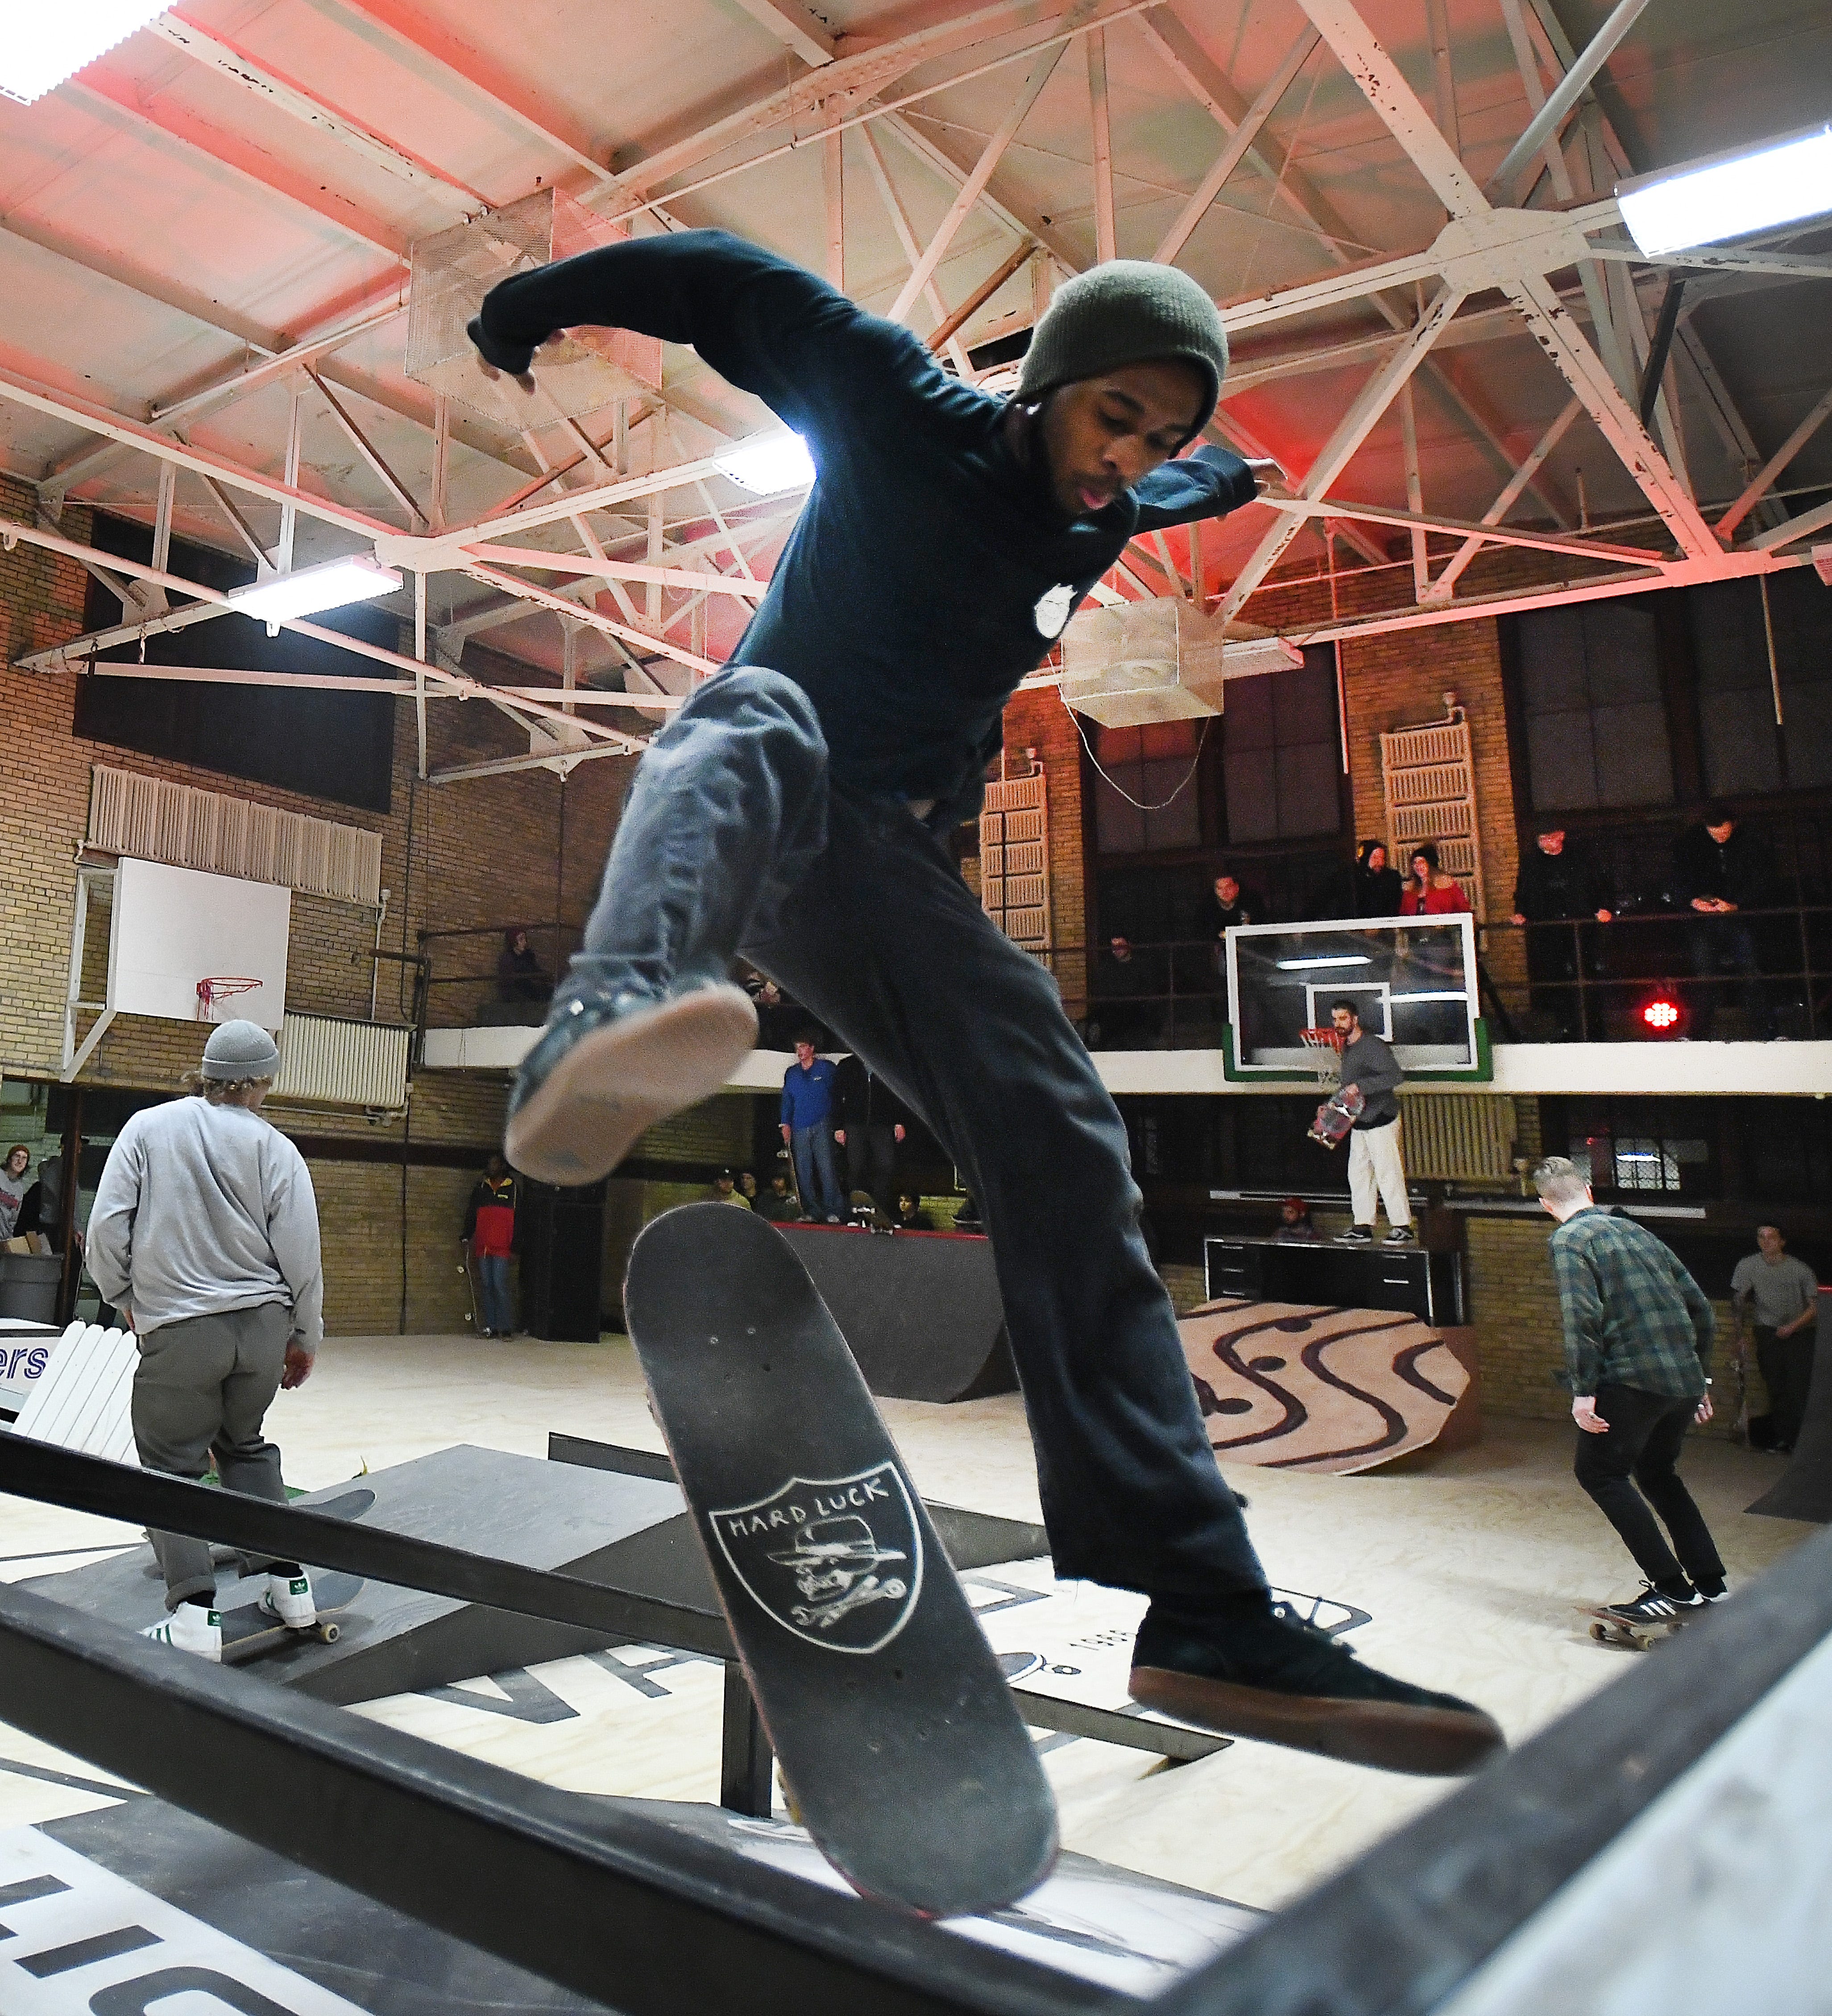 house of vans skateboard school,OFF 76 